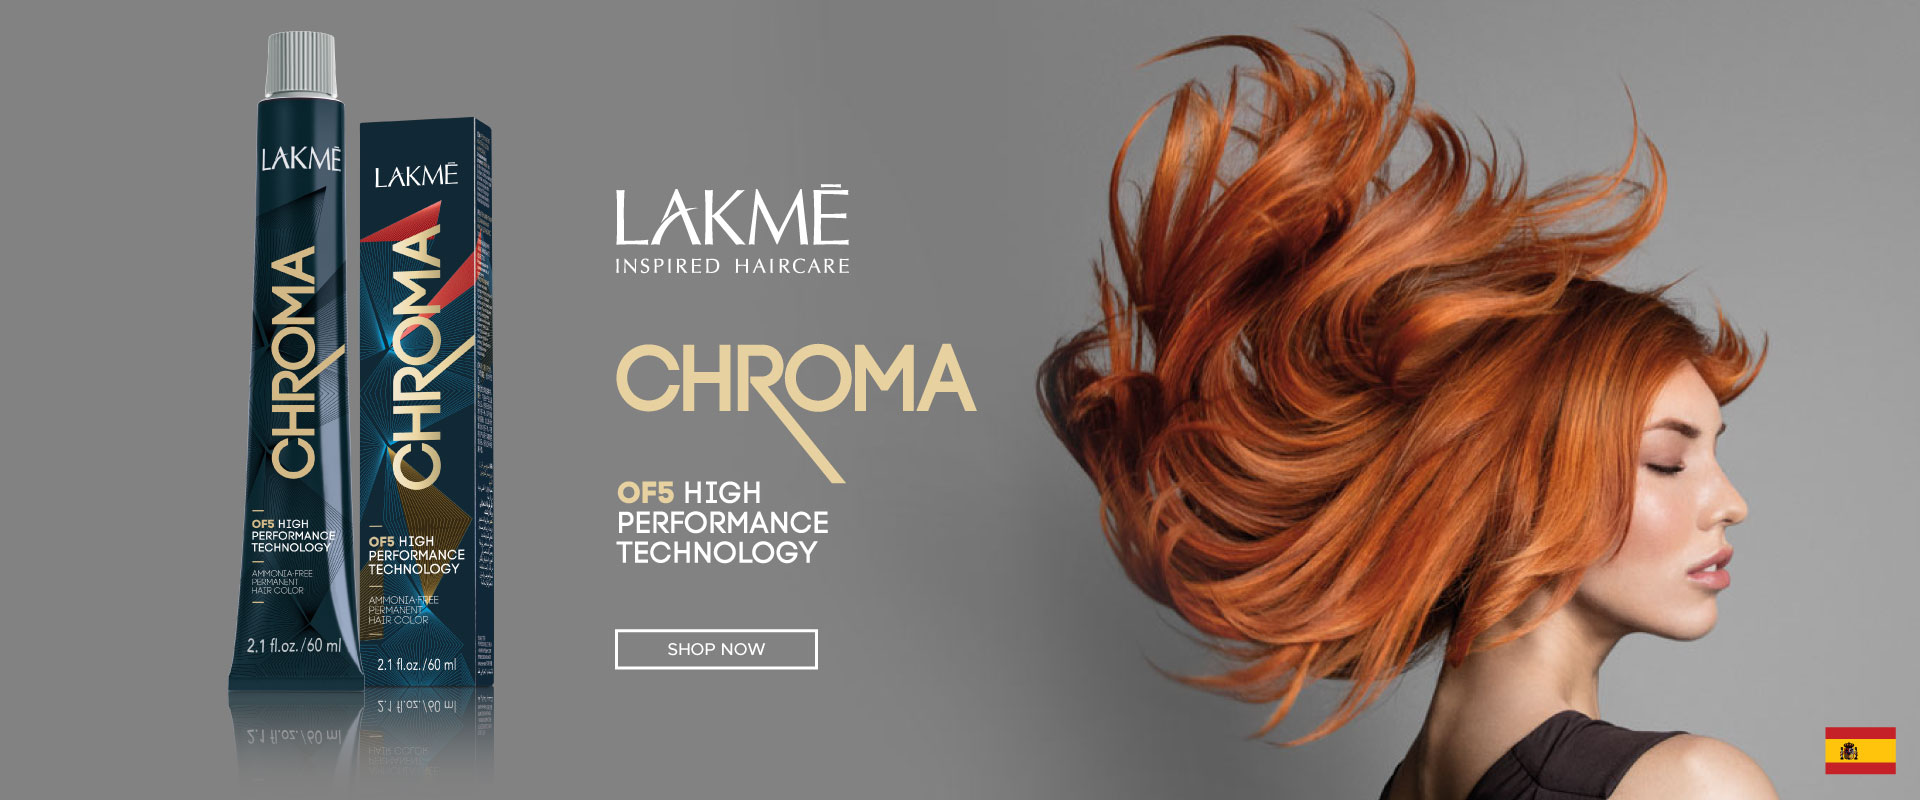 [Homepage] Lakme Chroma